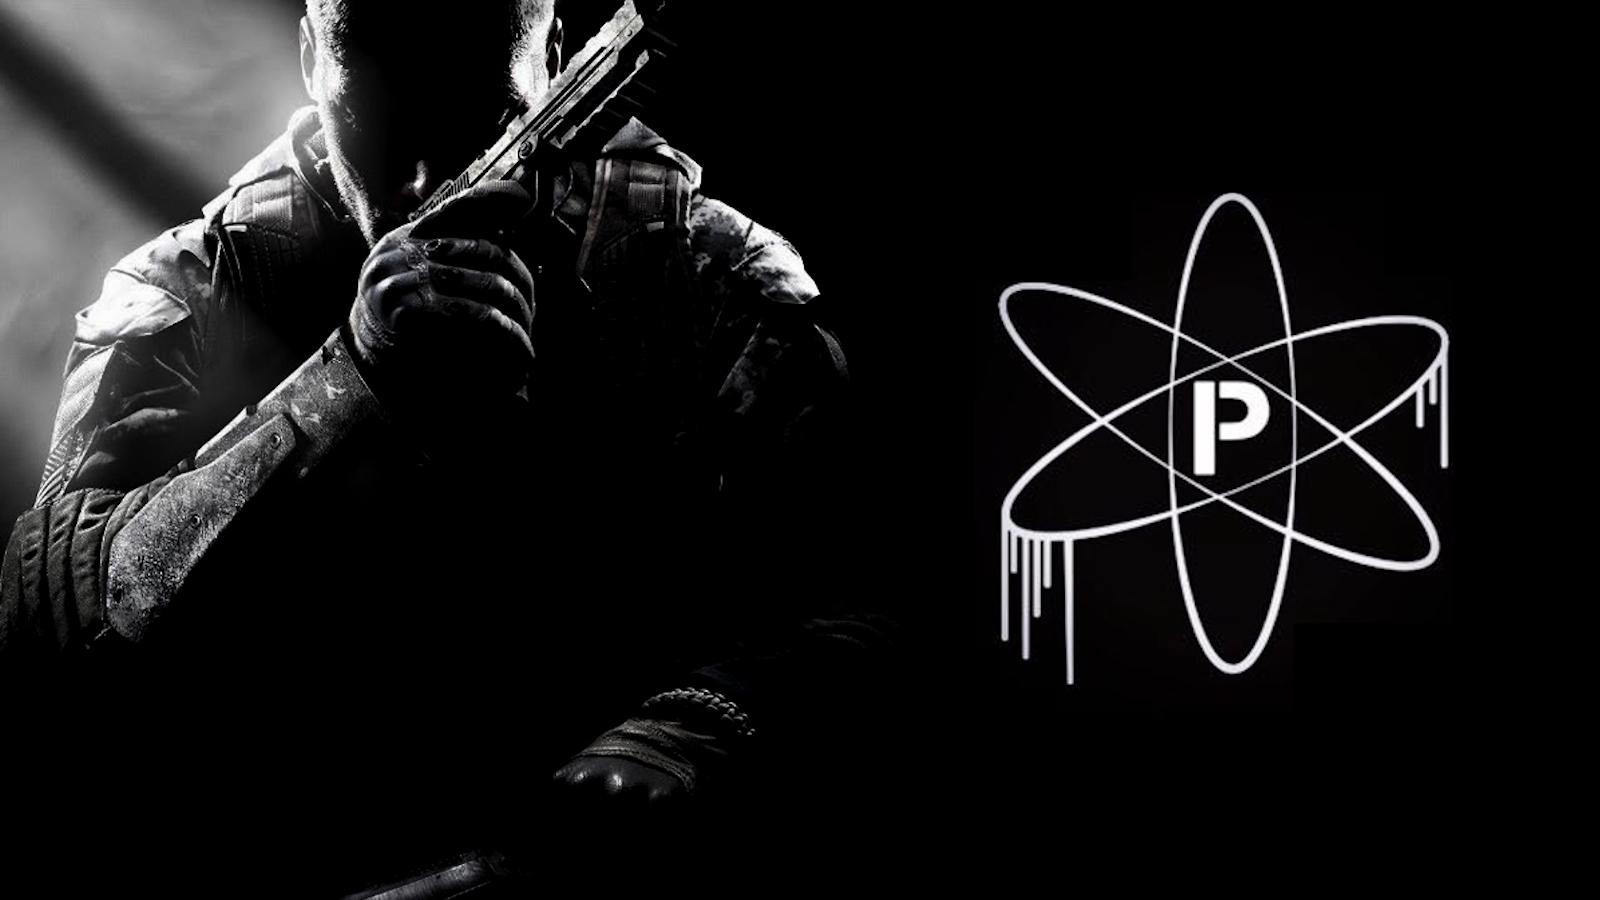 Plutonium mod logo next to Black Ops 2 official cover art.